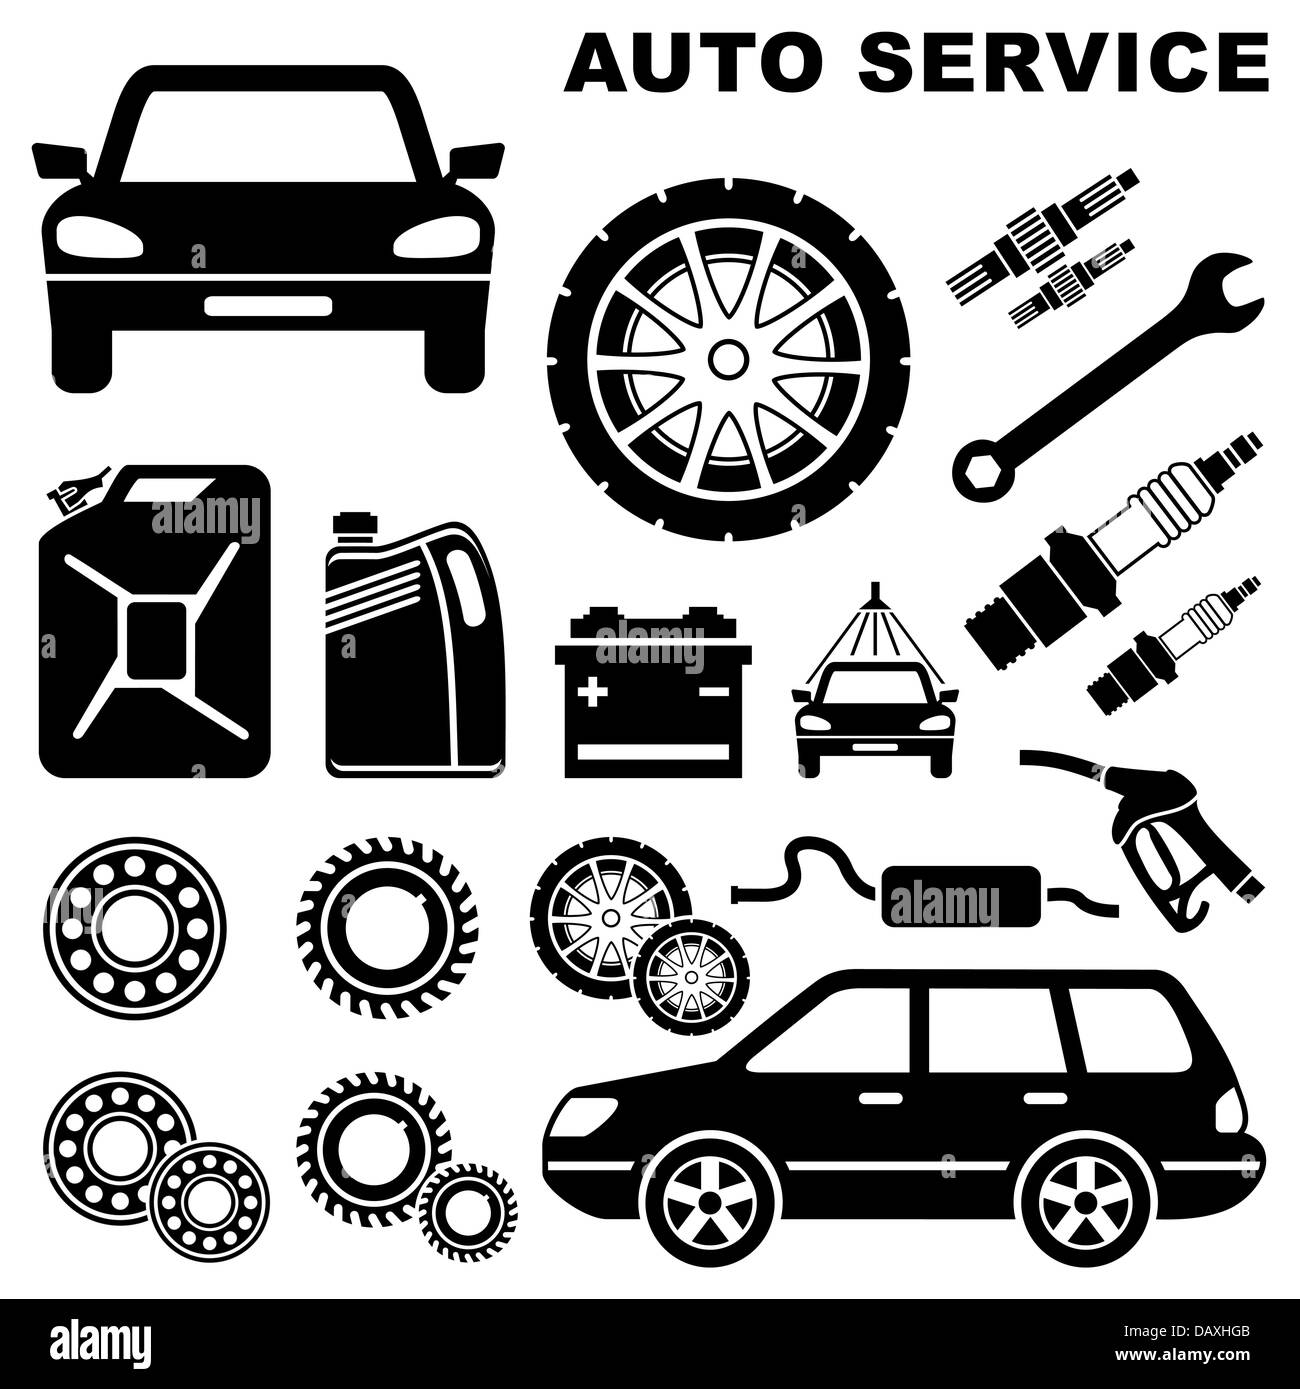 Car repair service icon Stock Photo